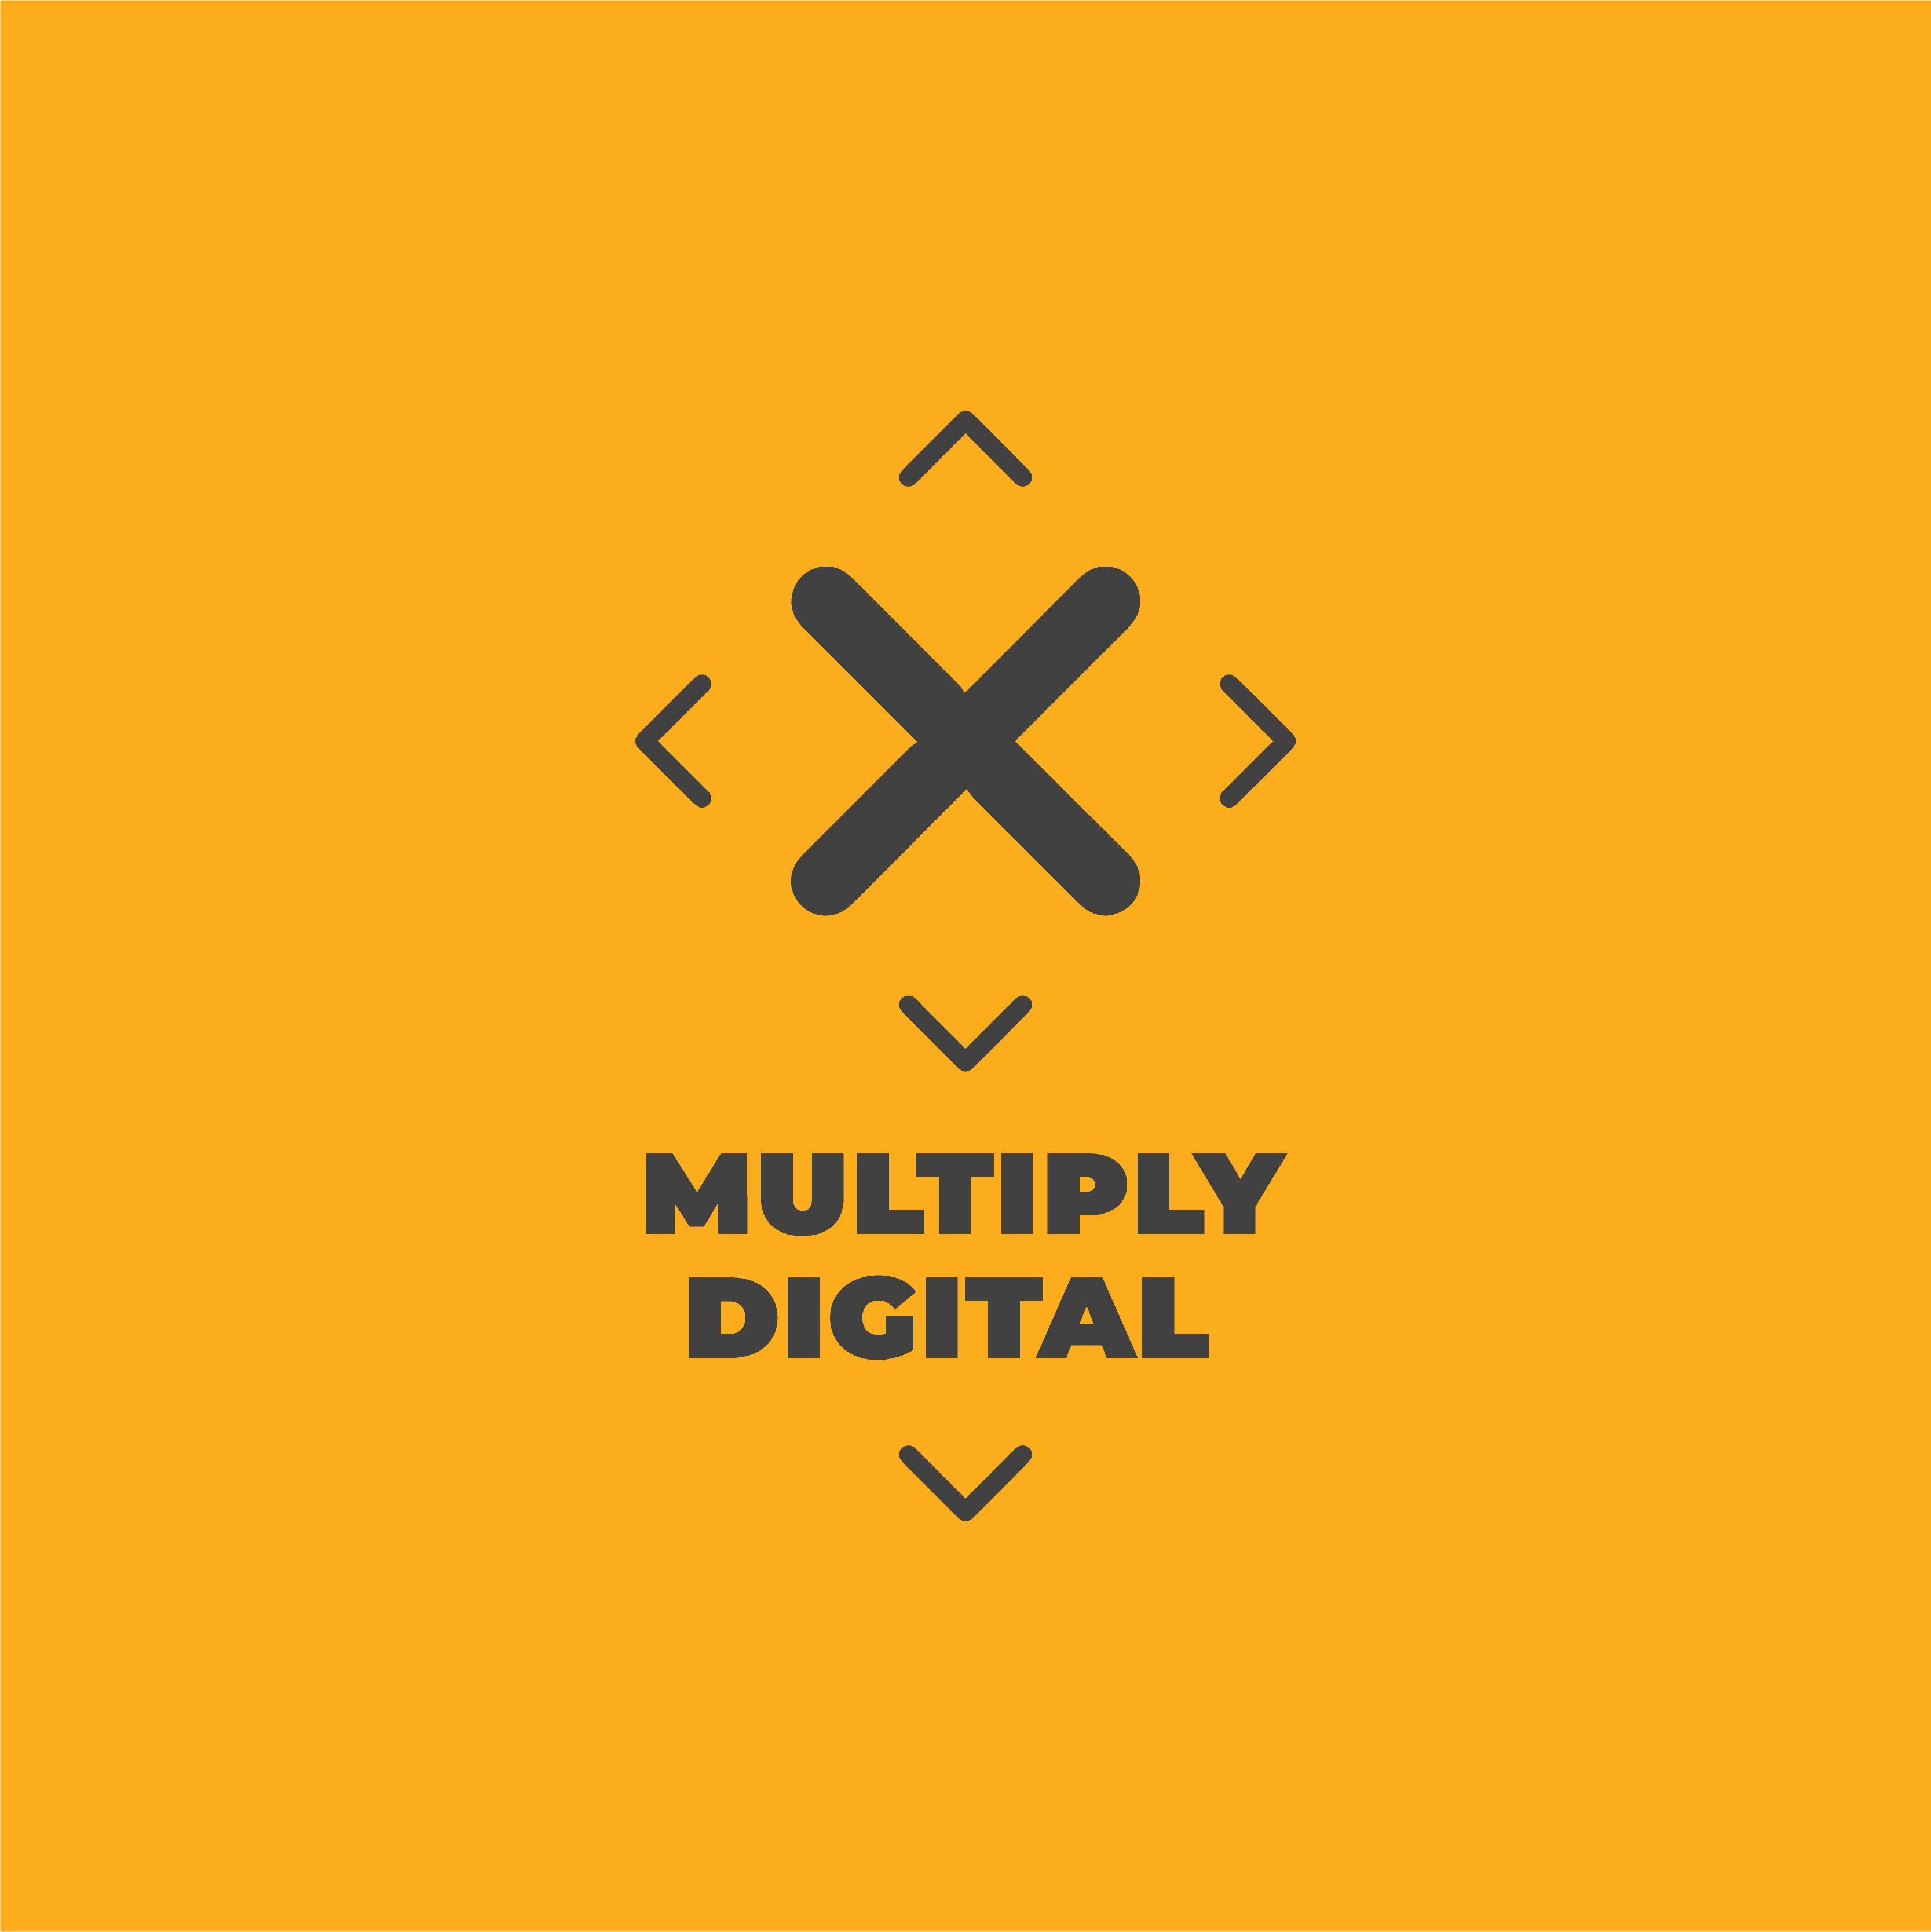 Multiply Digital